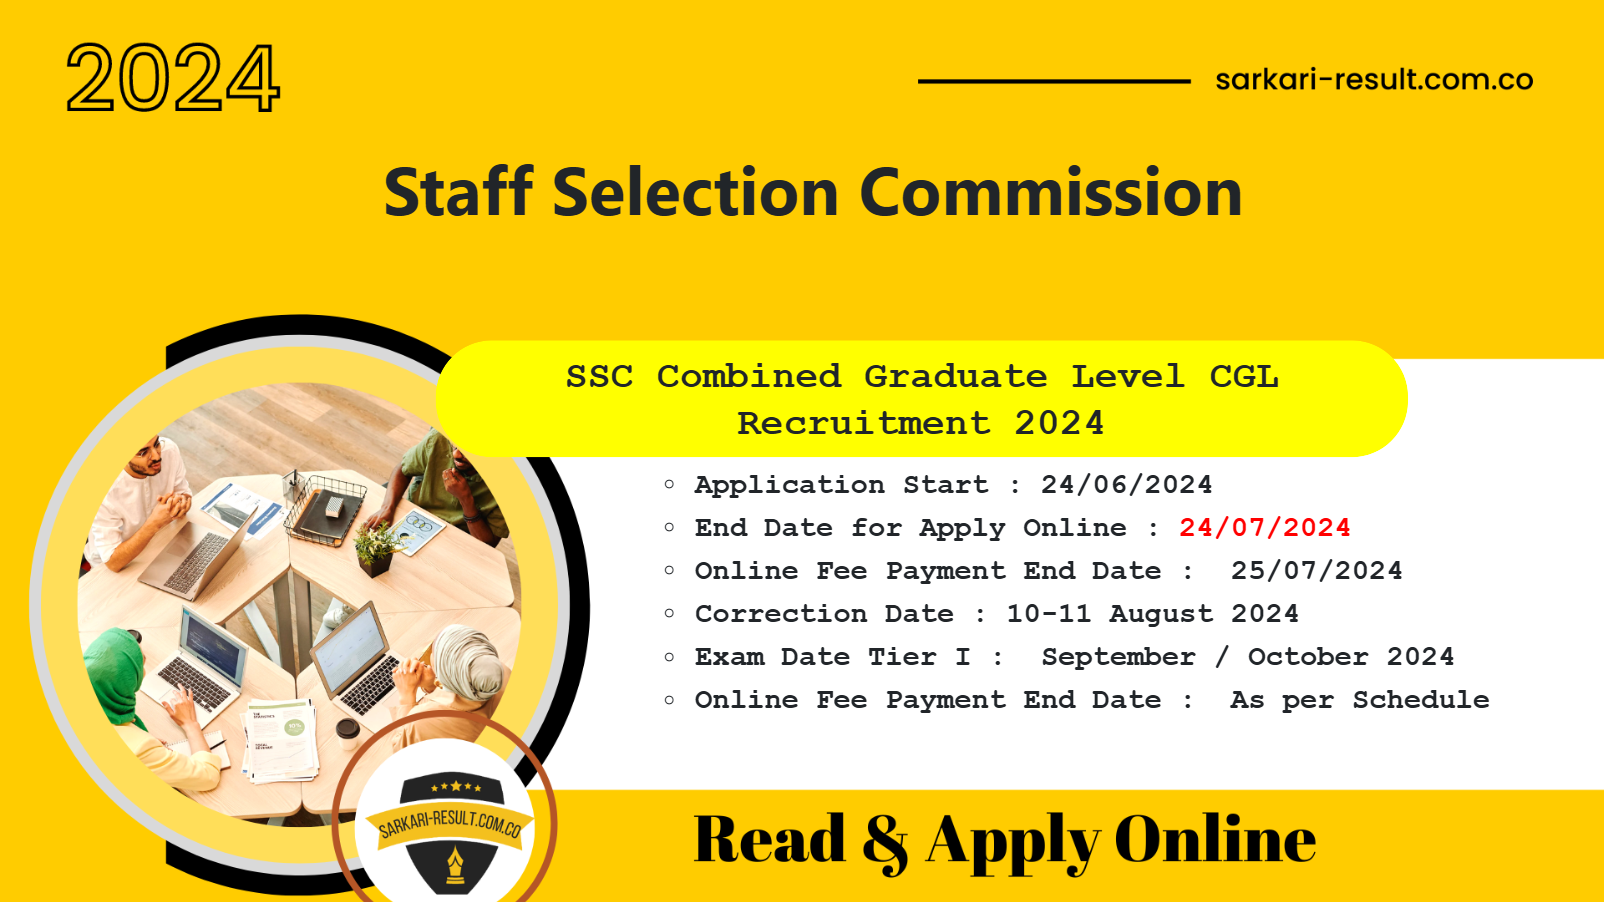 SSC Combined Graduate Level CGL Online Form 2024